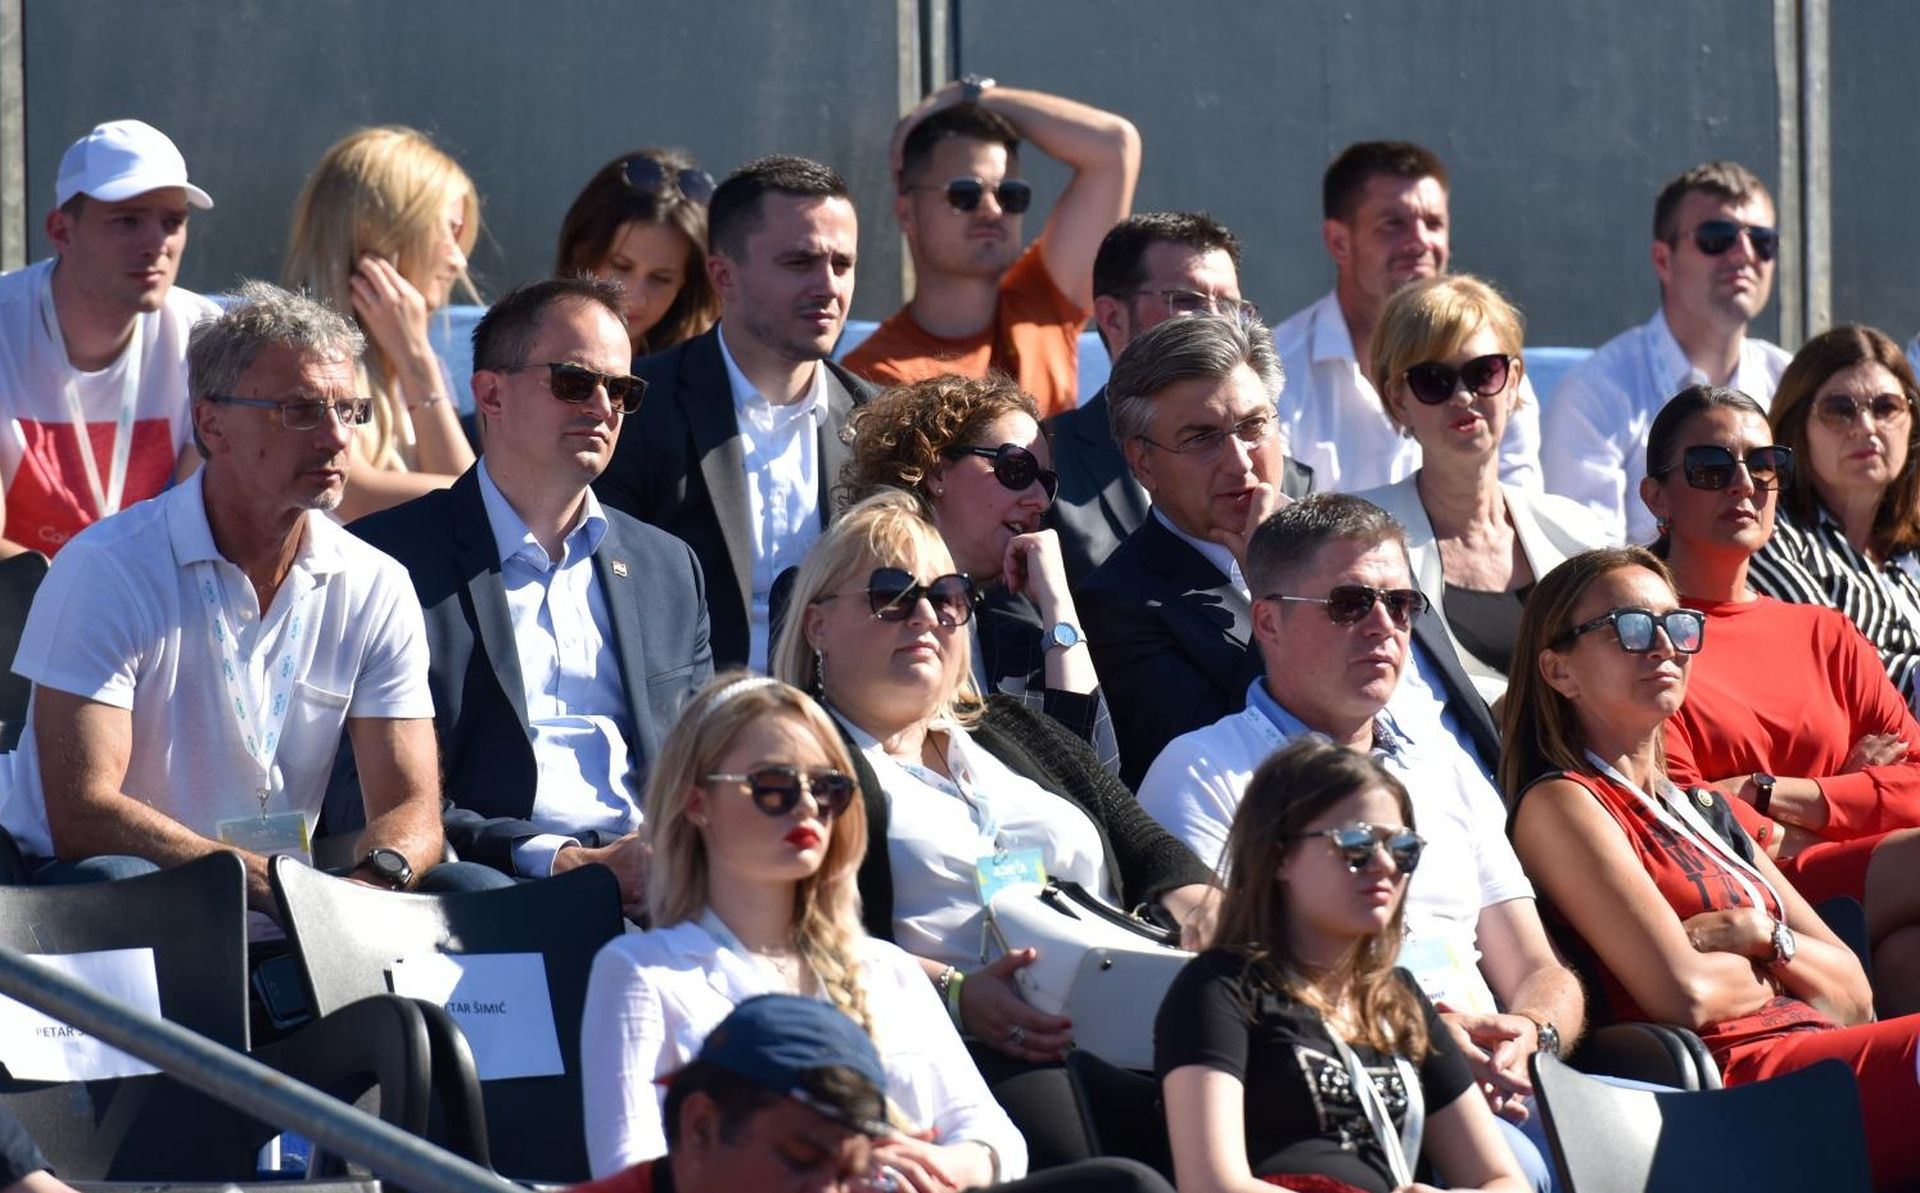 20.06.2020., Zadar - Teniski turnir Adria tour: Novak Djokovic i Pedja Krstin. Premijer Andrej Plenkovic posjetio je turnir. 
Photo: Dino Stanin/PIXSELL